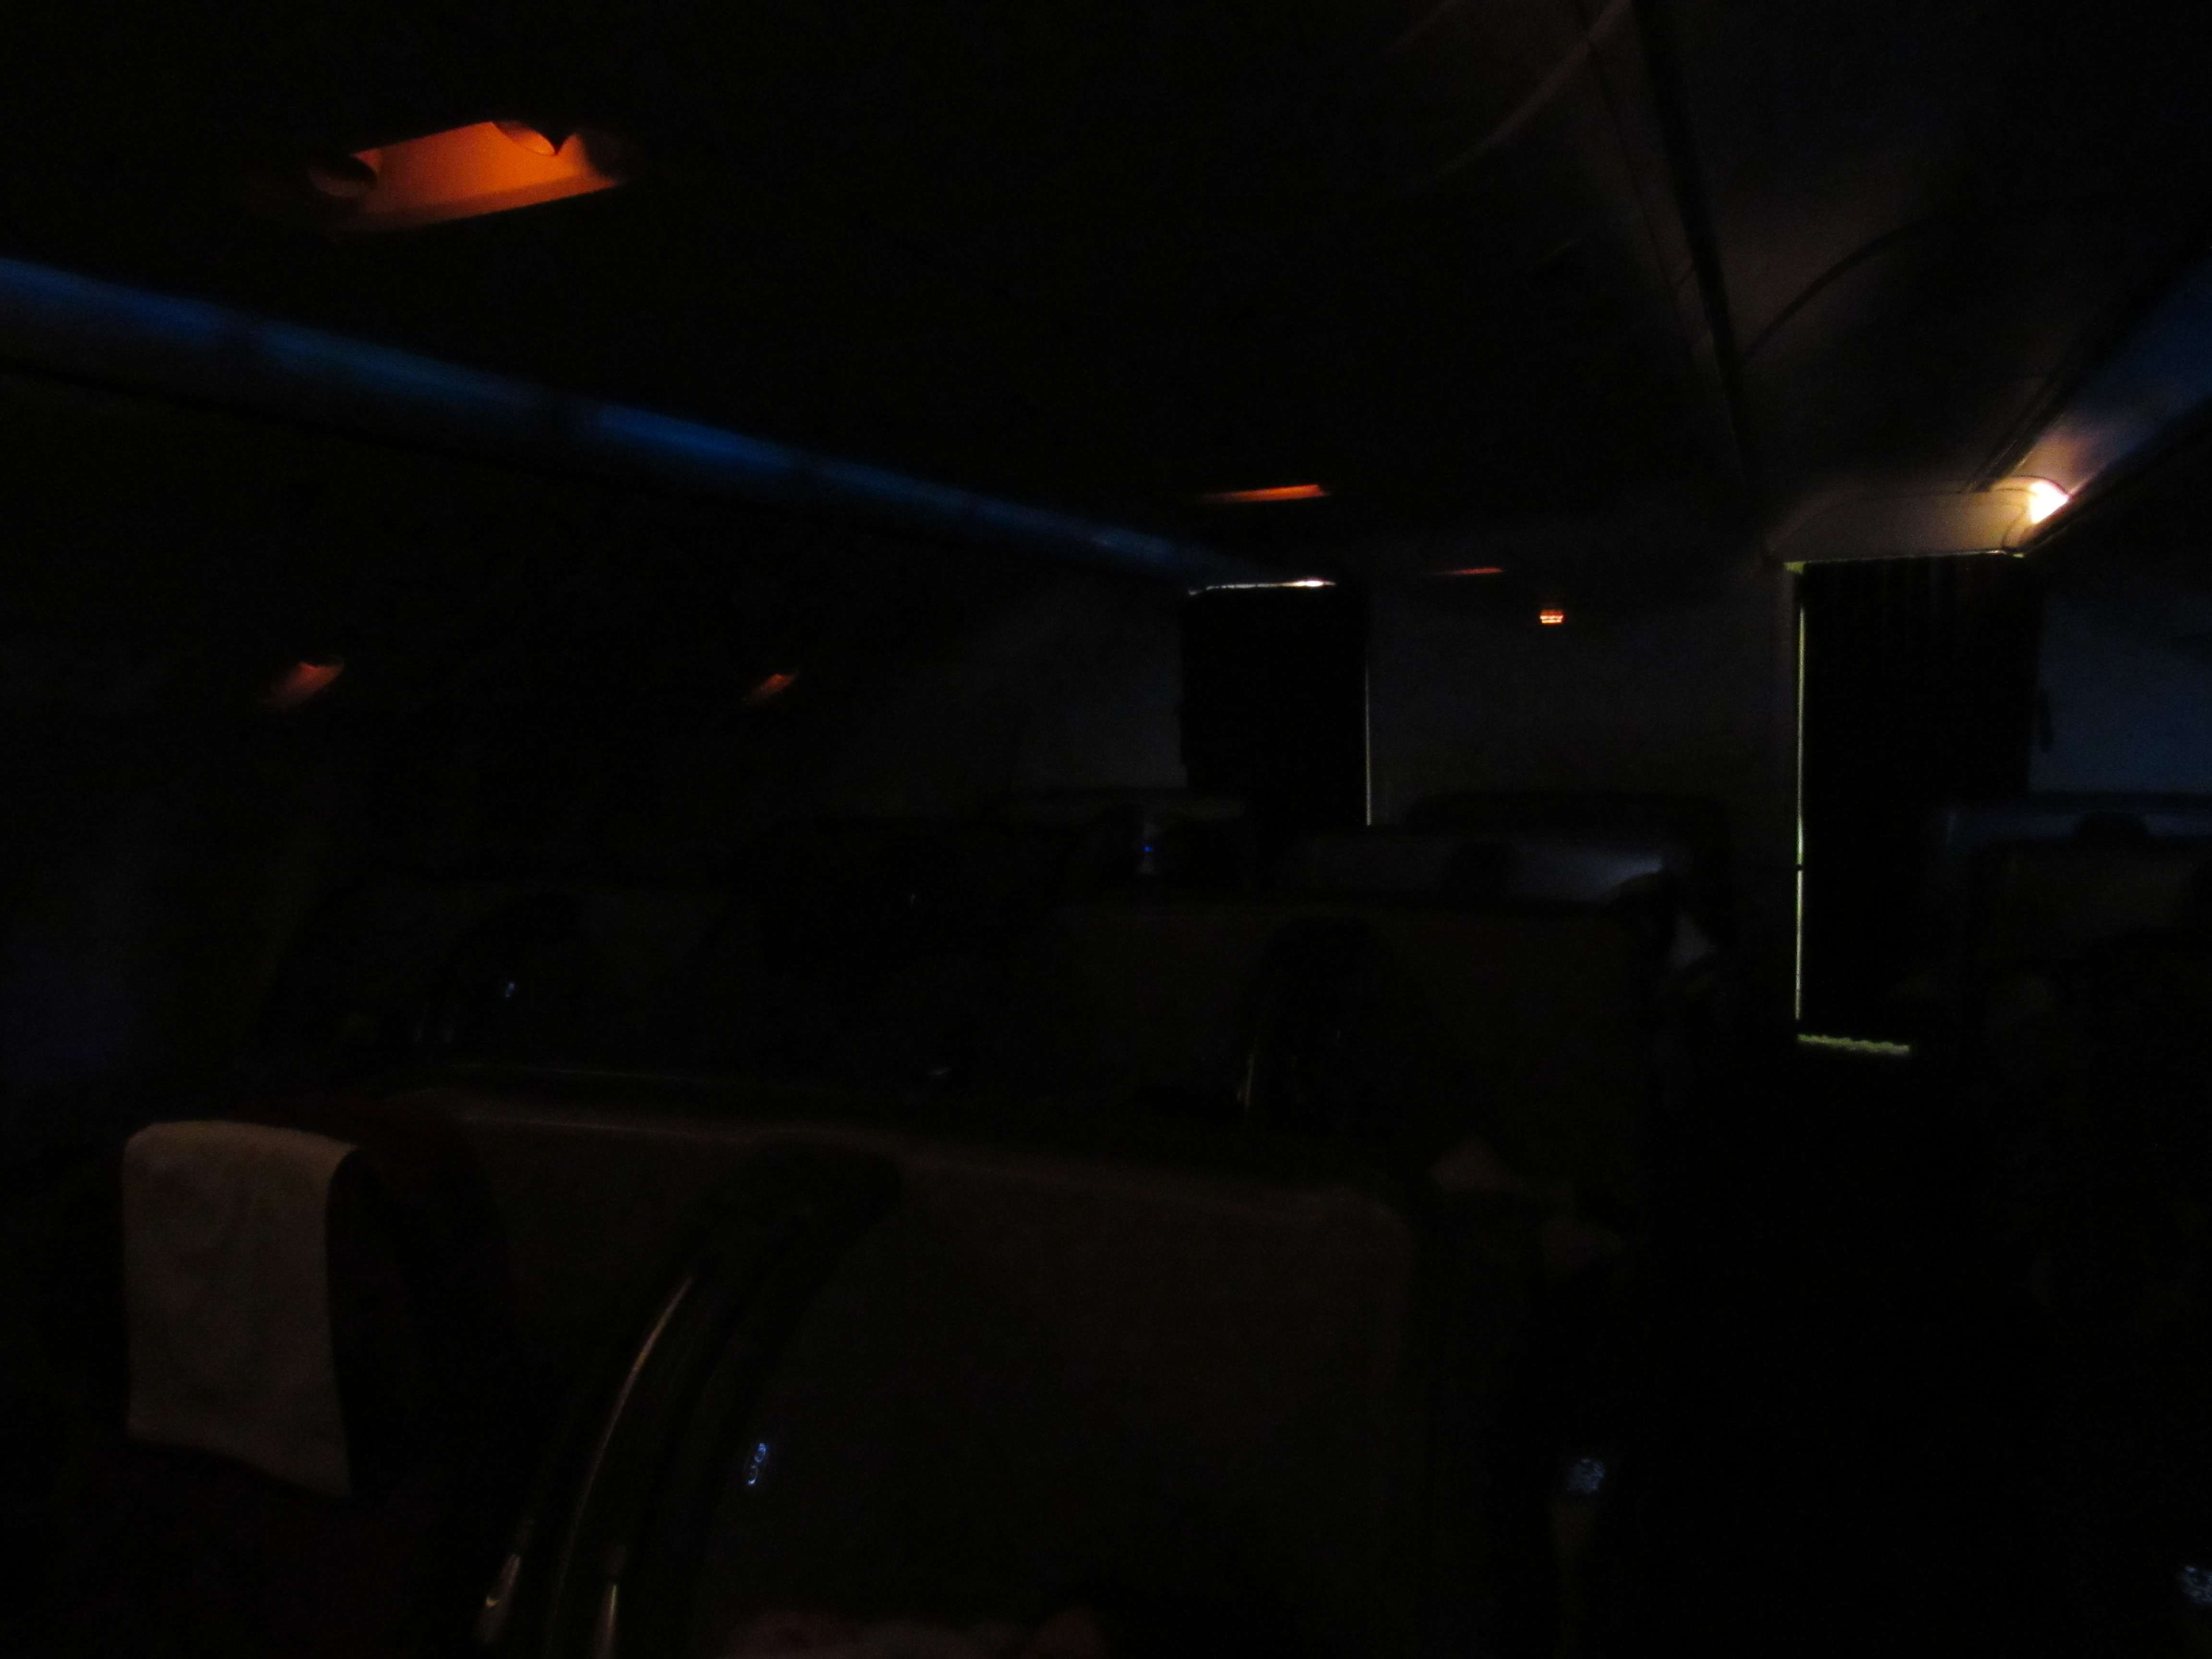 Qatar Airways Business Class Cabin at night